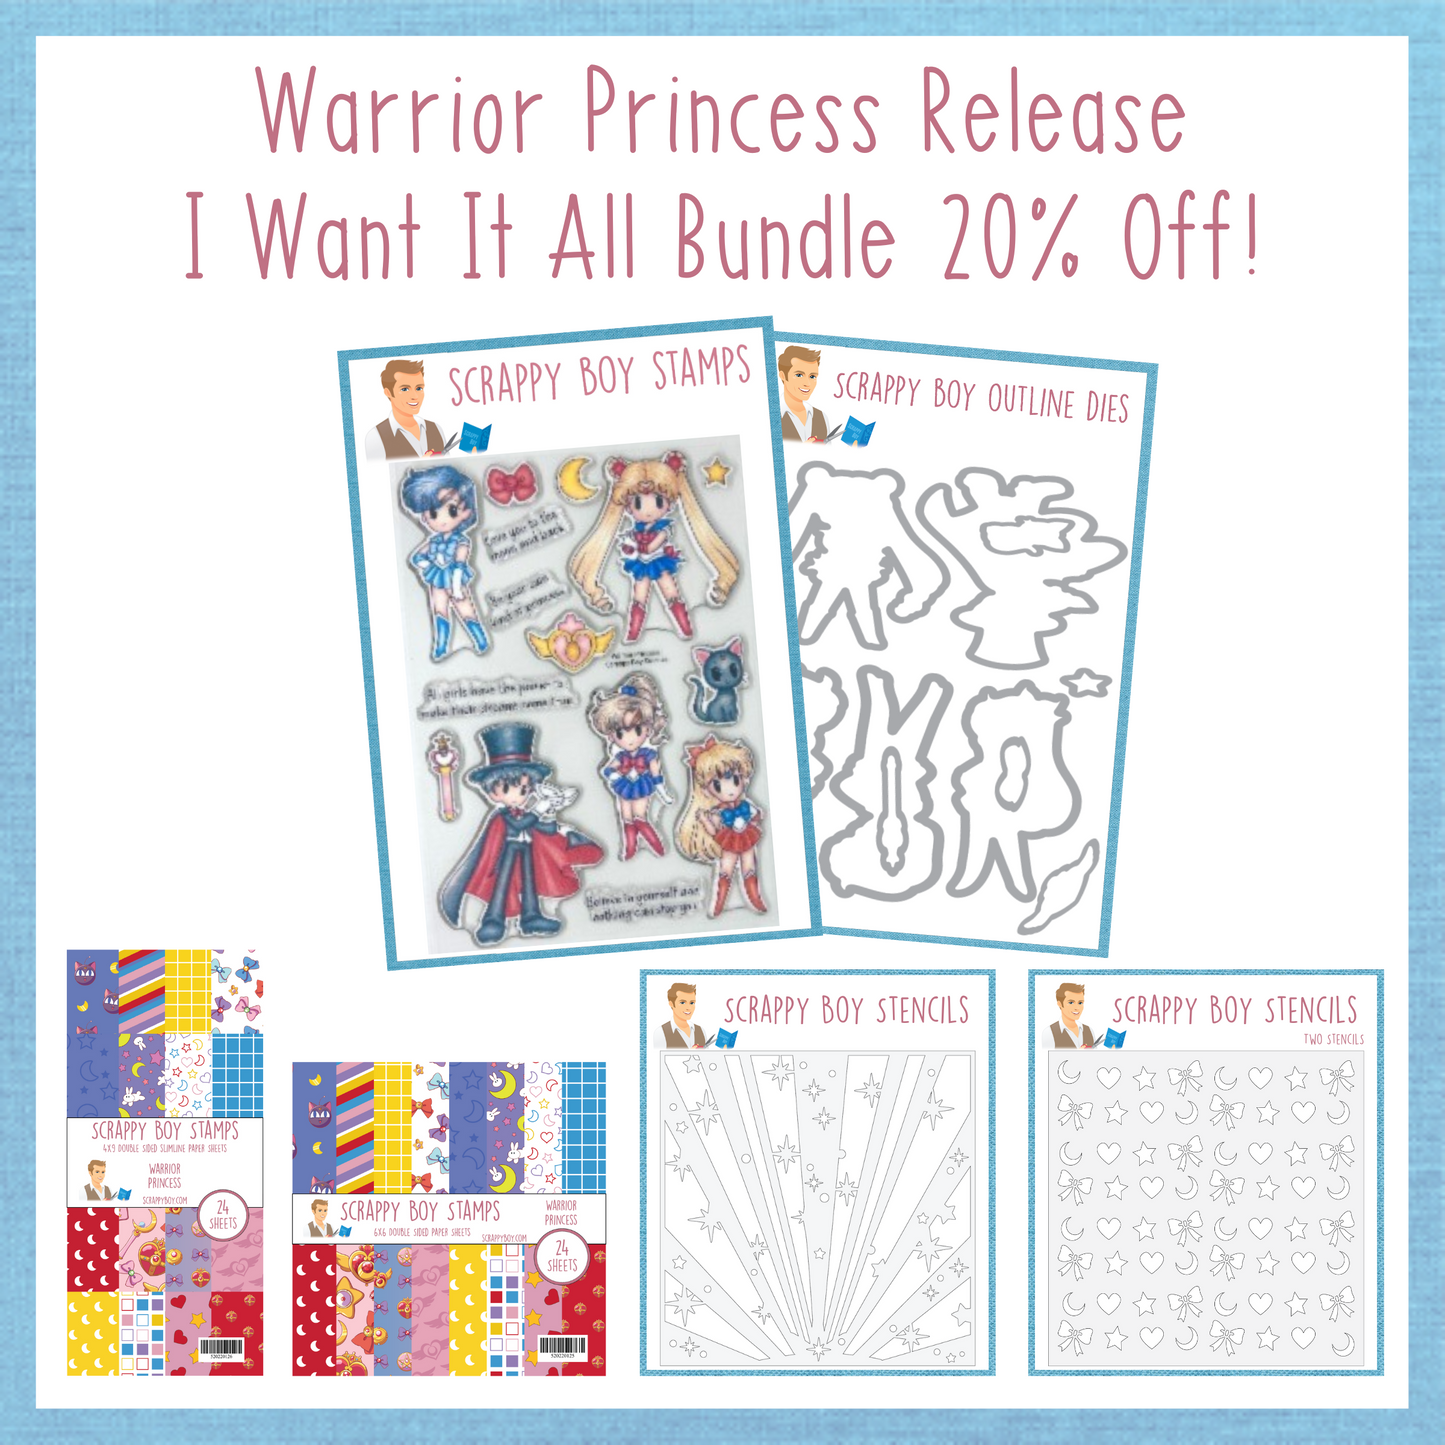 I Want It All Bundle - Warrior Princess scrappyboystamps